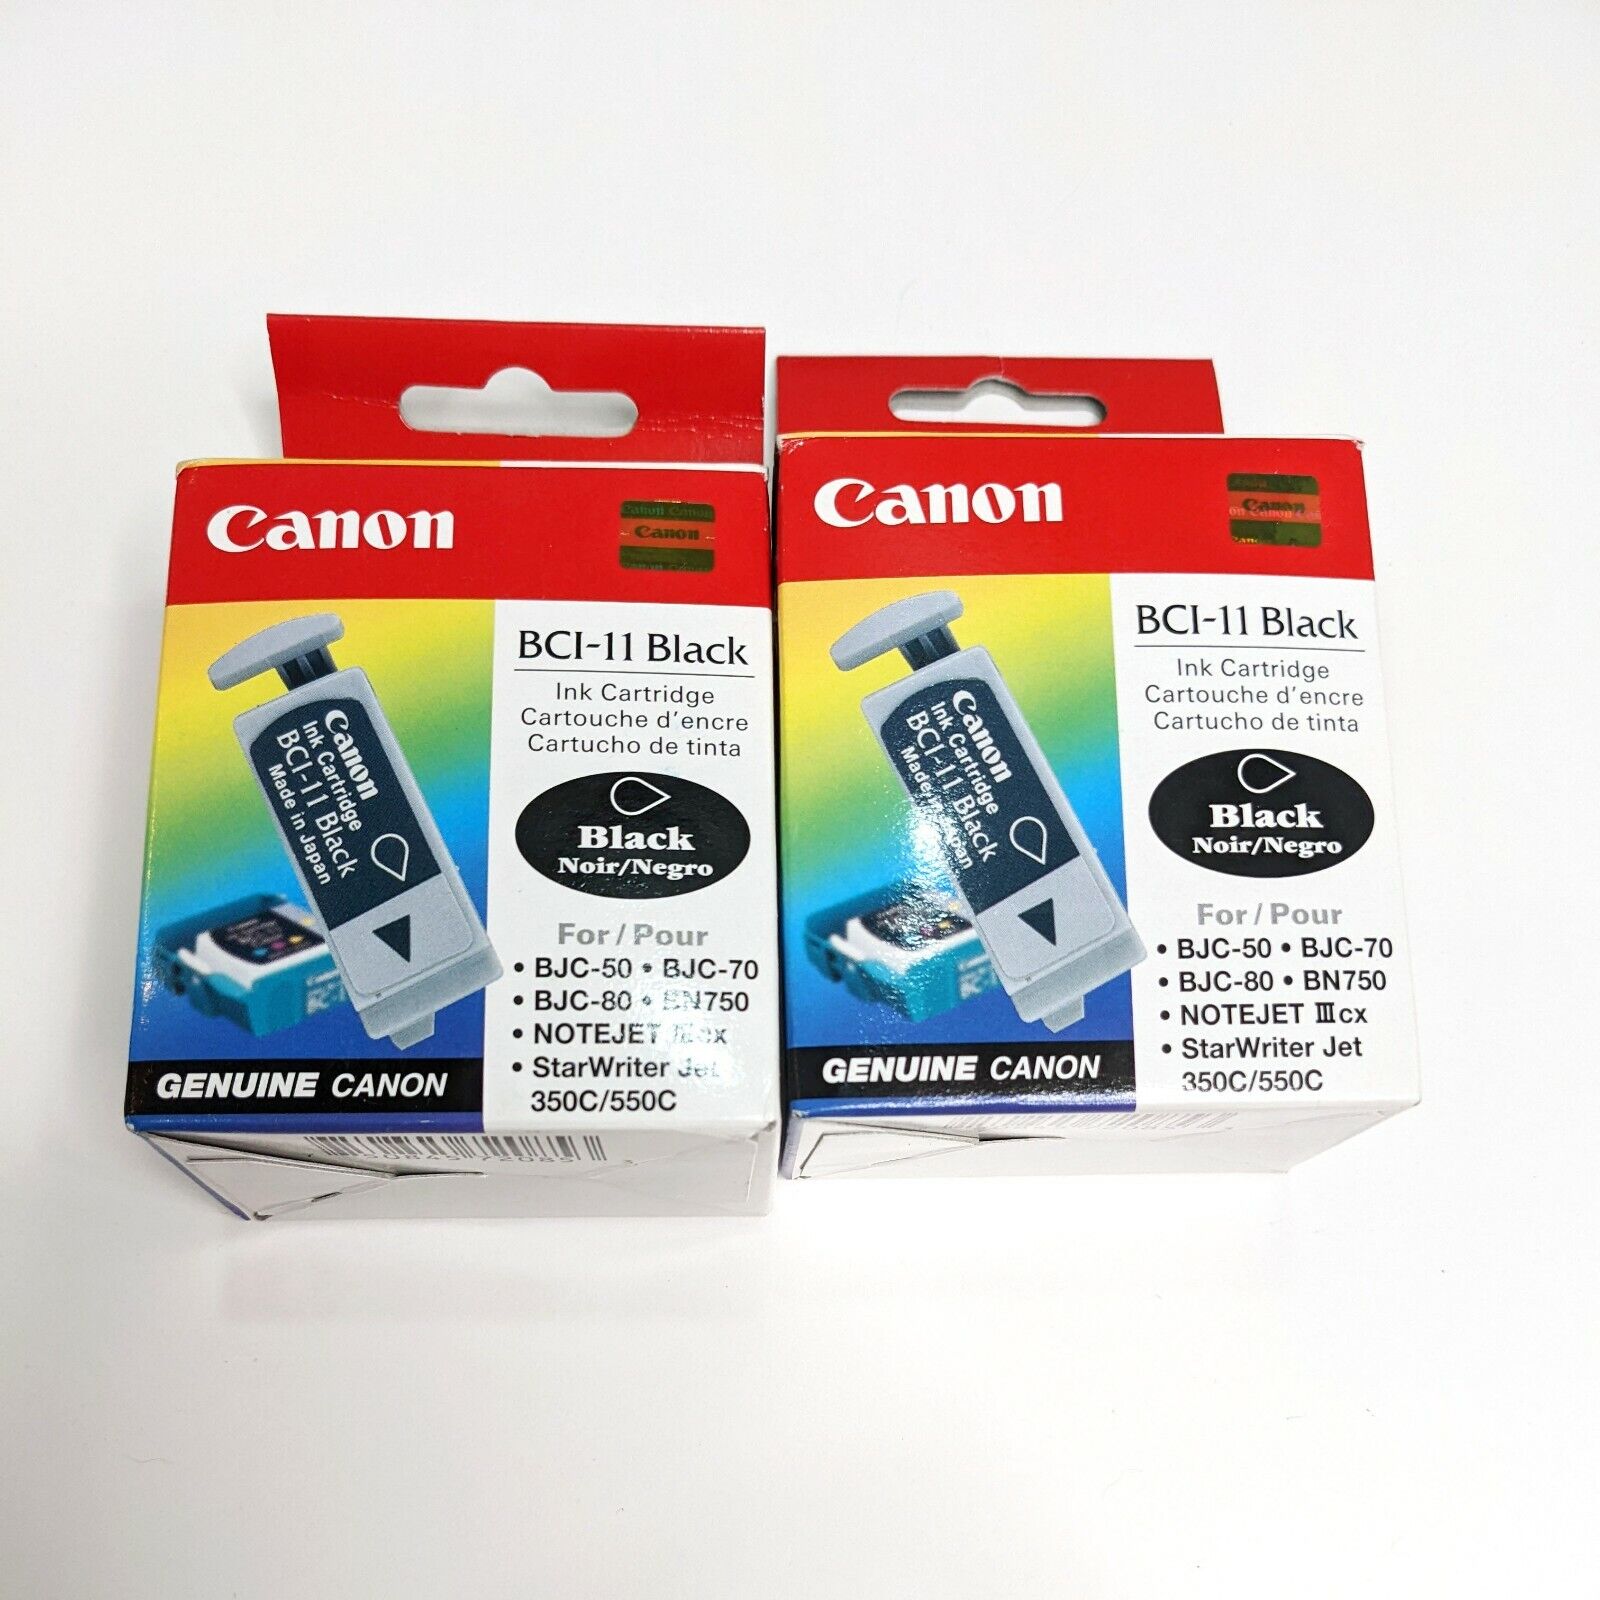 Canon BCI-11 Black Ink Cartridges Lot Set of 6